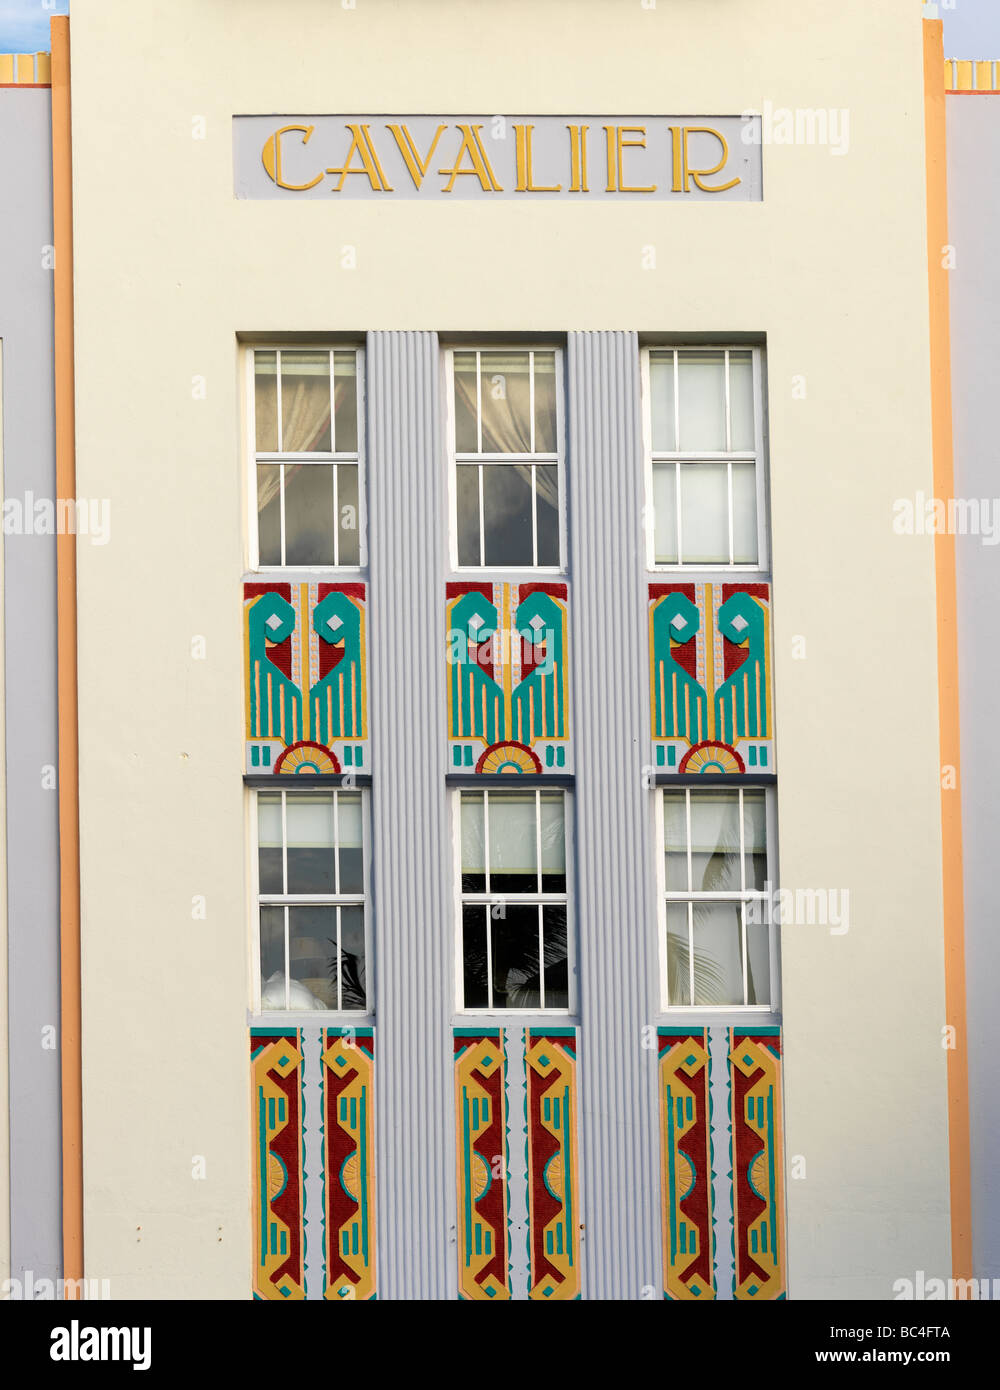 Art-Deco-Architektur, Hotels, South Beach, Miami, Kavalier Hotel Stockfoto